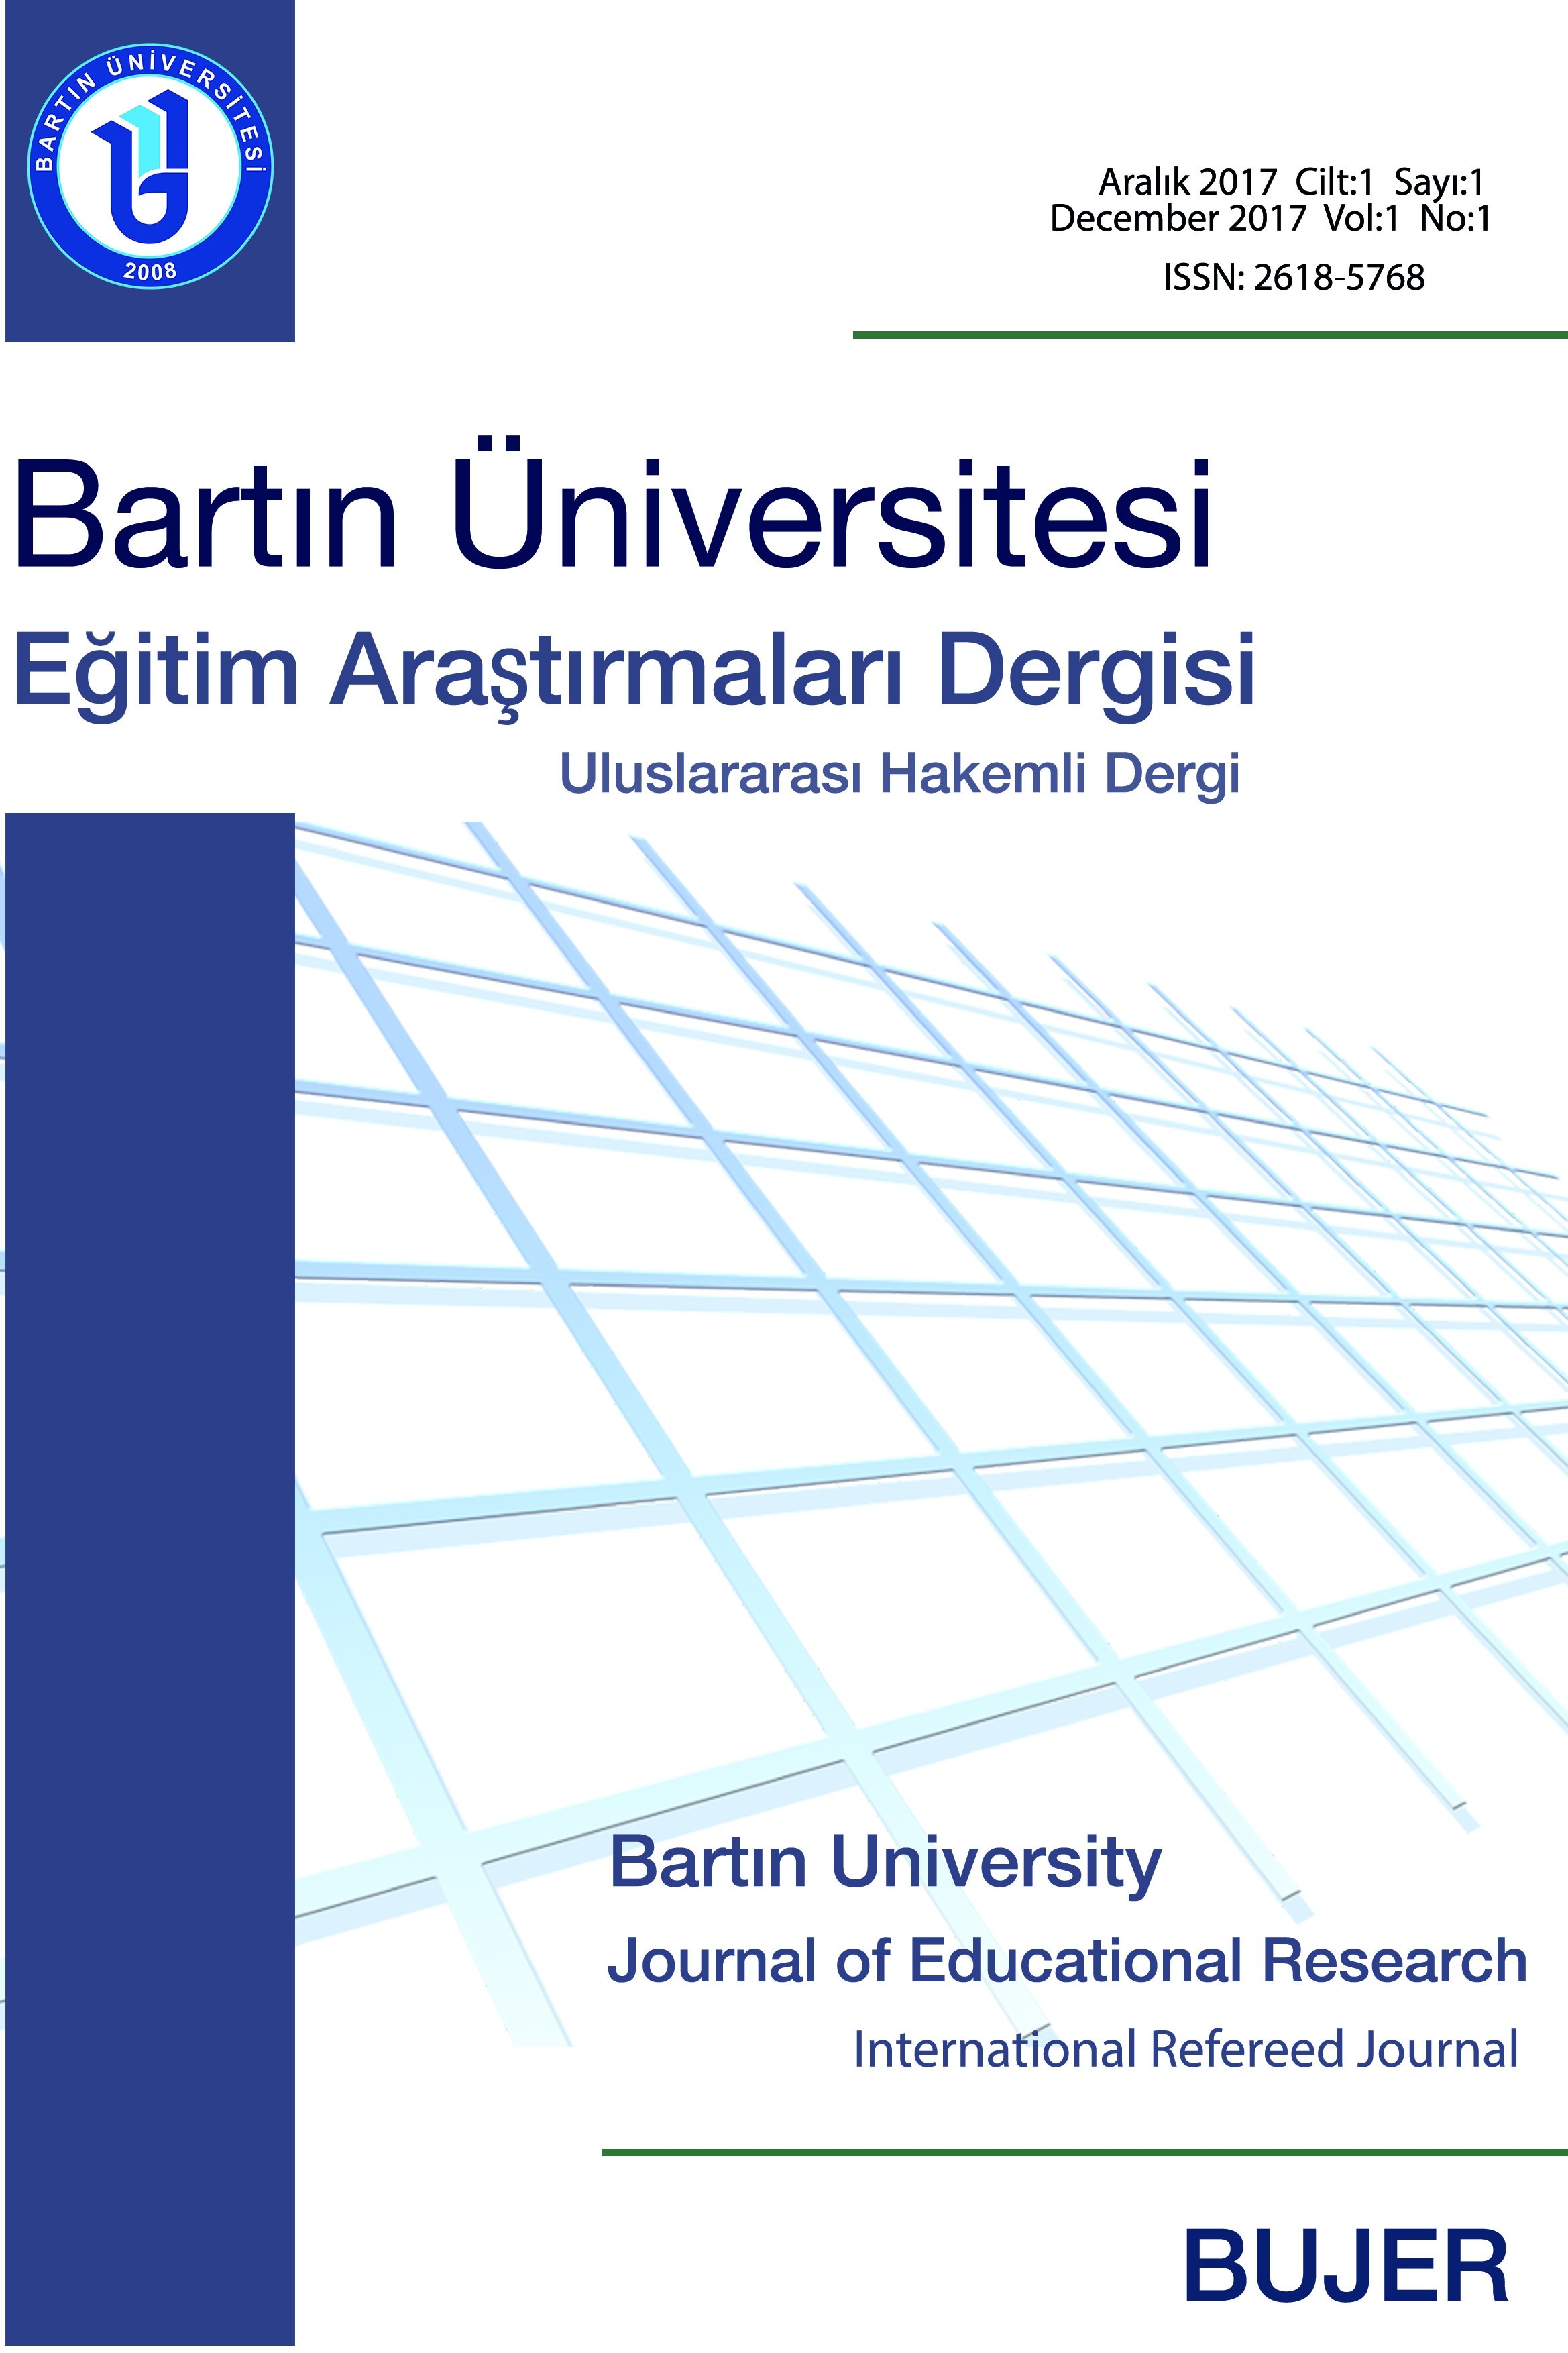 Bartın University Journal of Educational Research